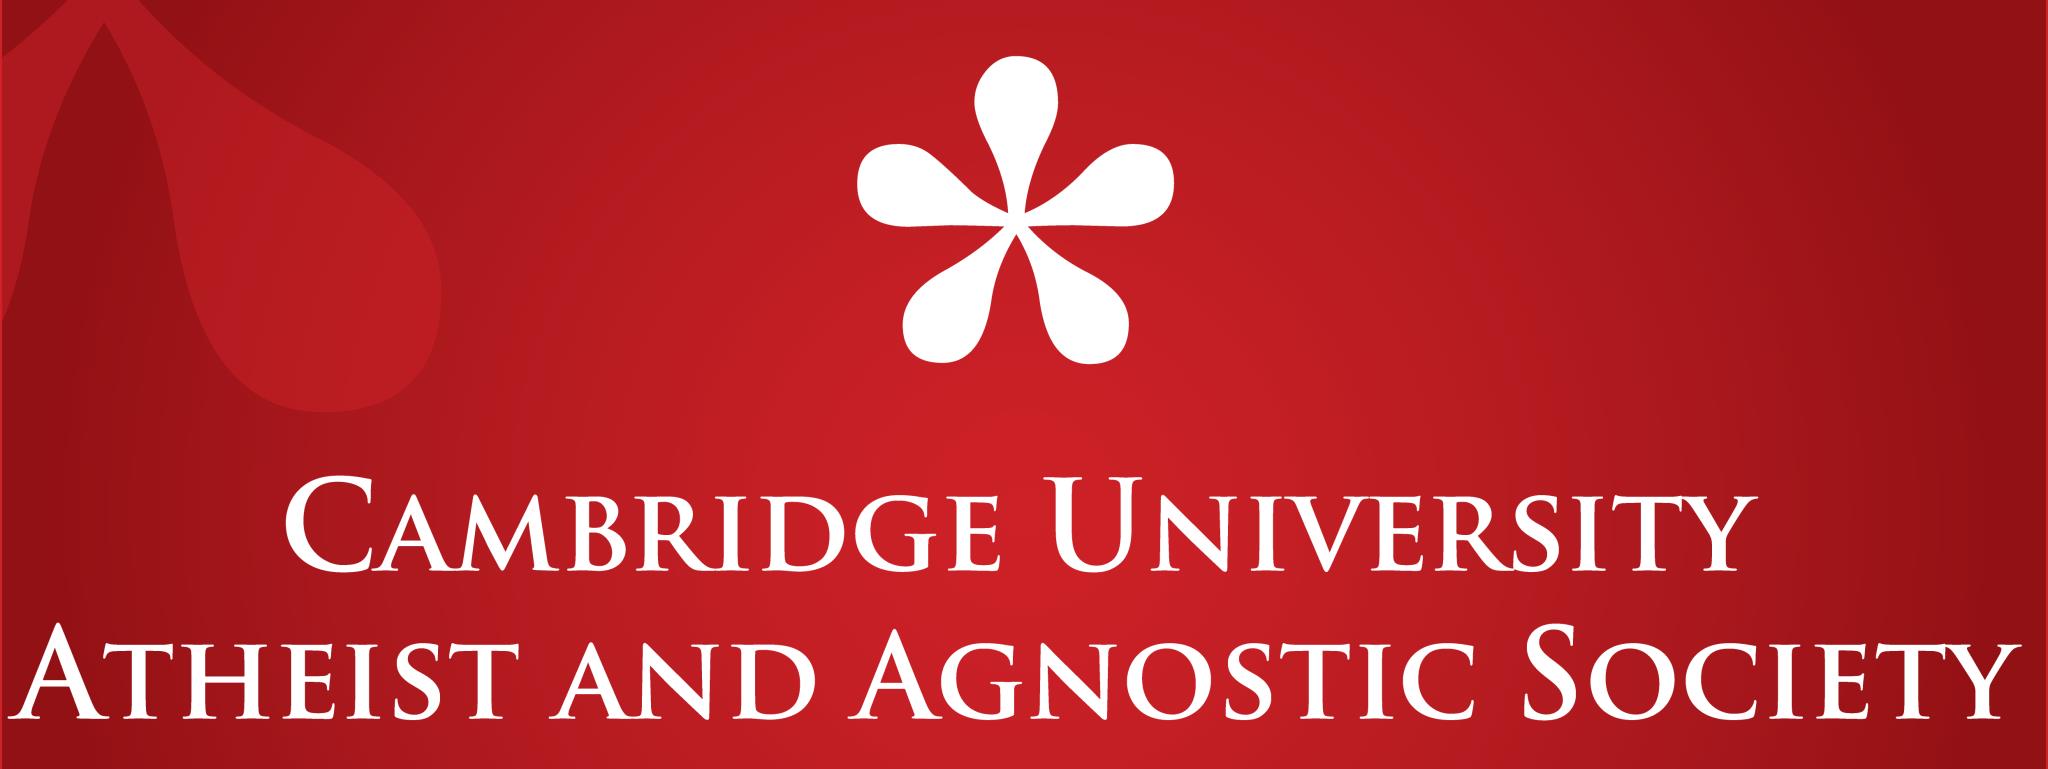 Cambridge University Atheist and Agnostic Society 2008